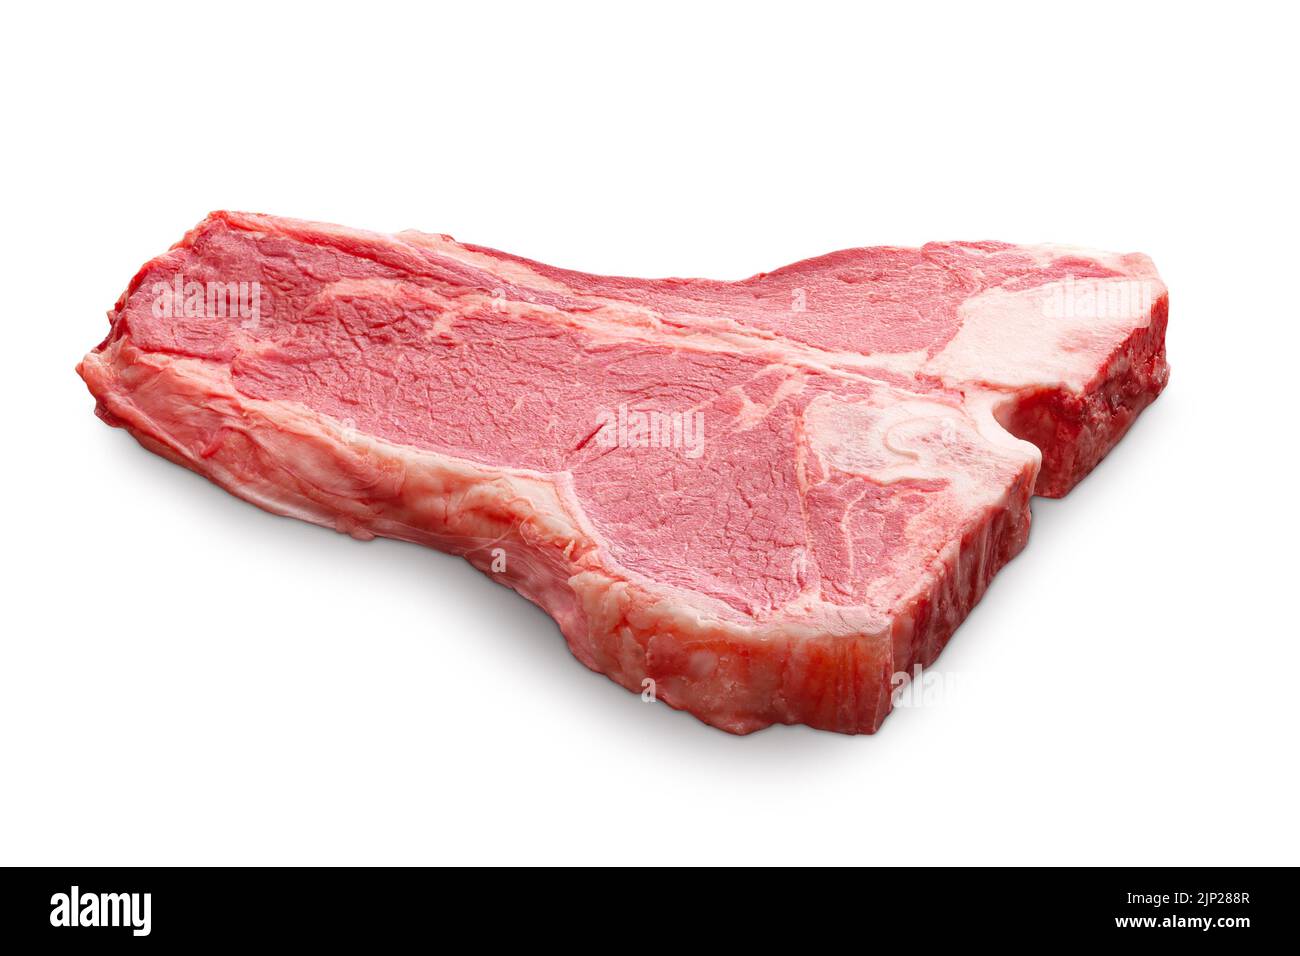 Raw Porterhouse or T-bone beef meat steak isolated on white background. Deep focus Stock Photo